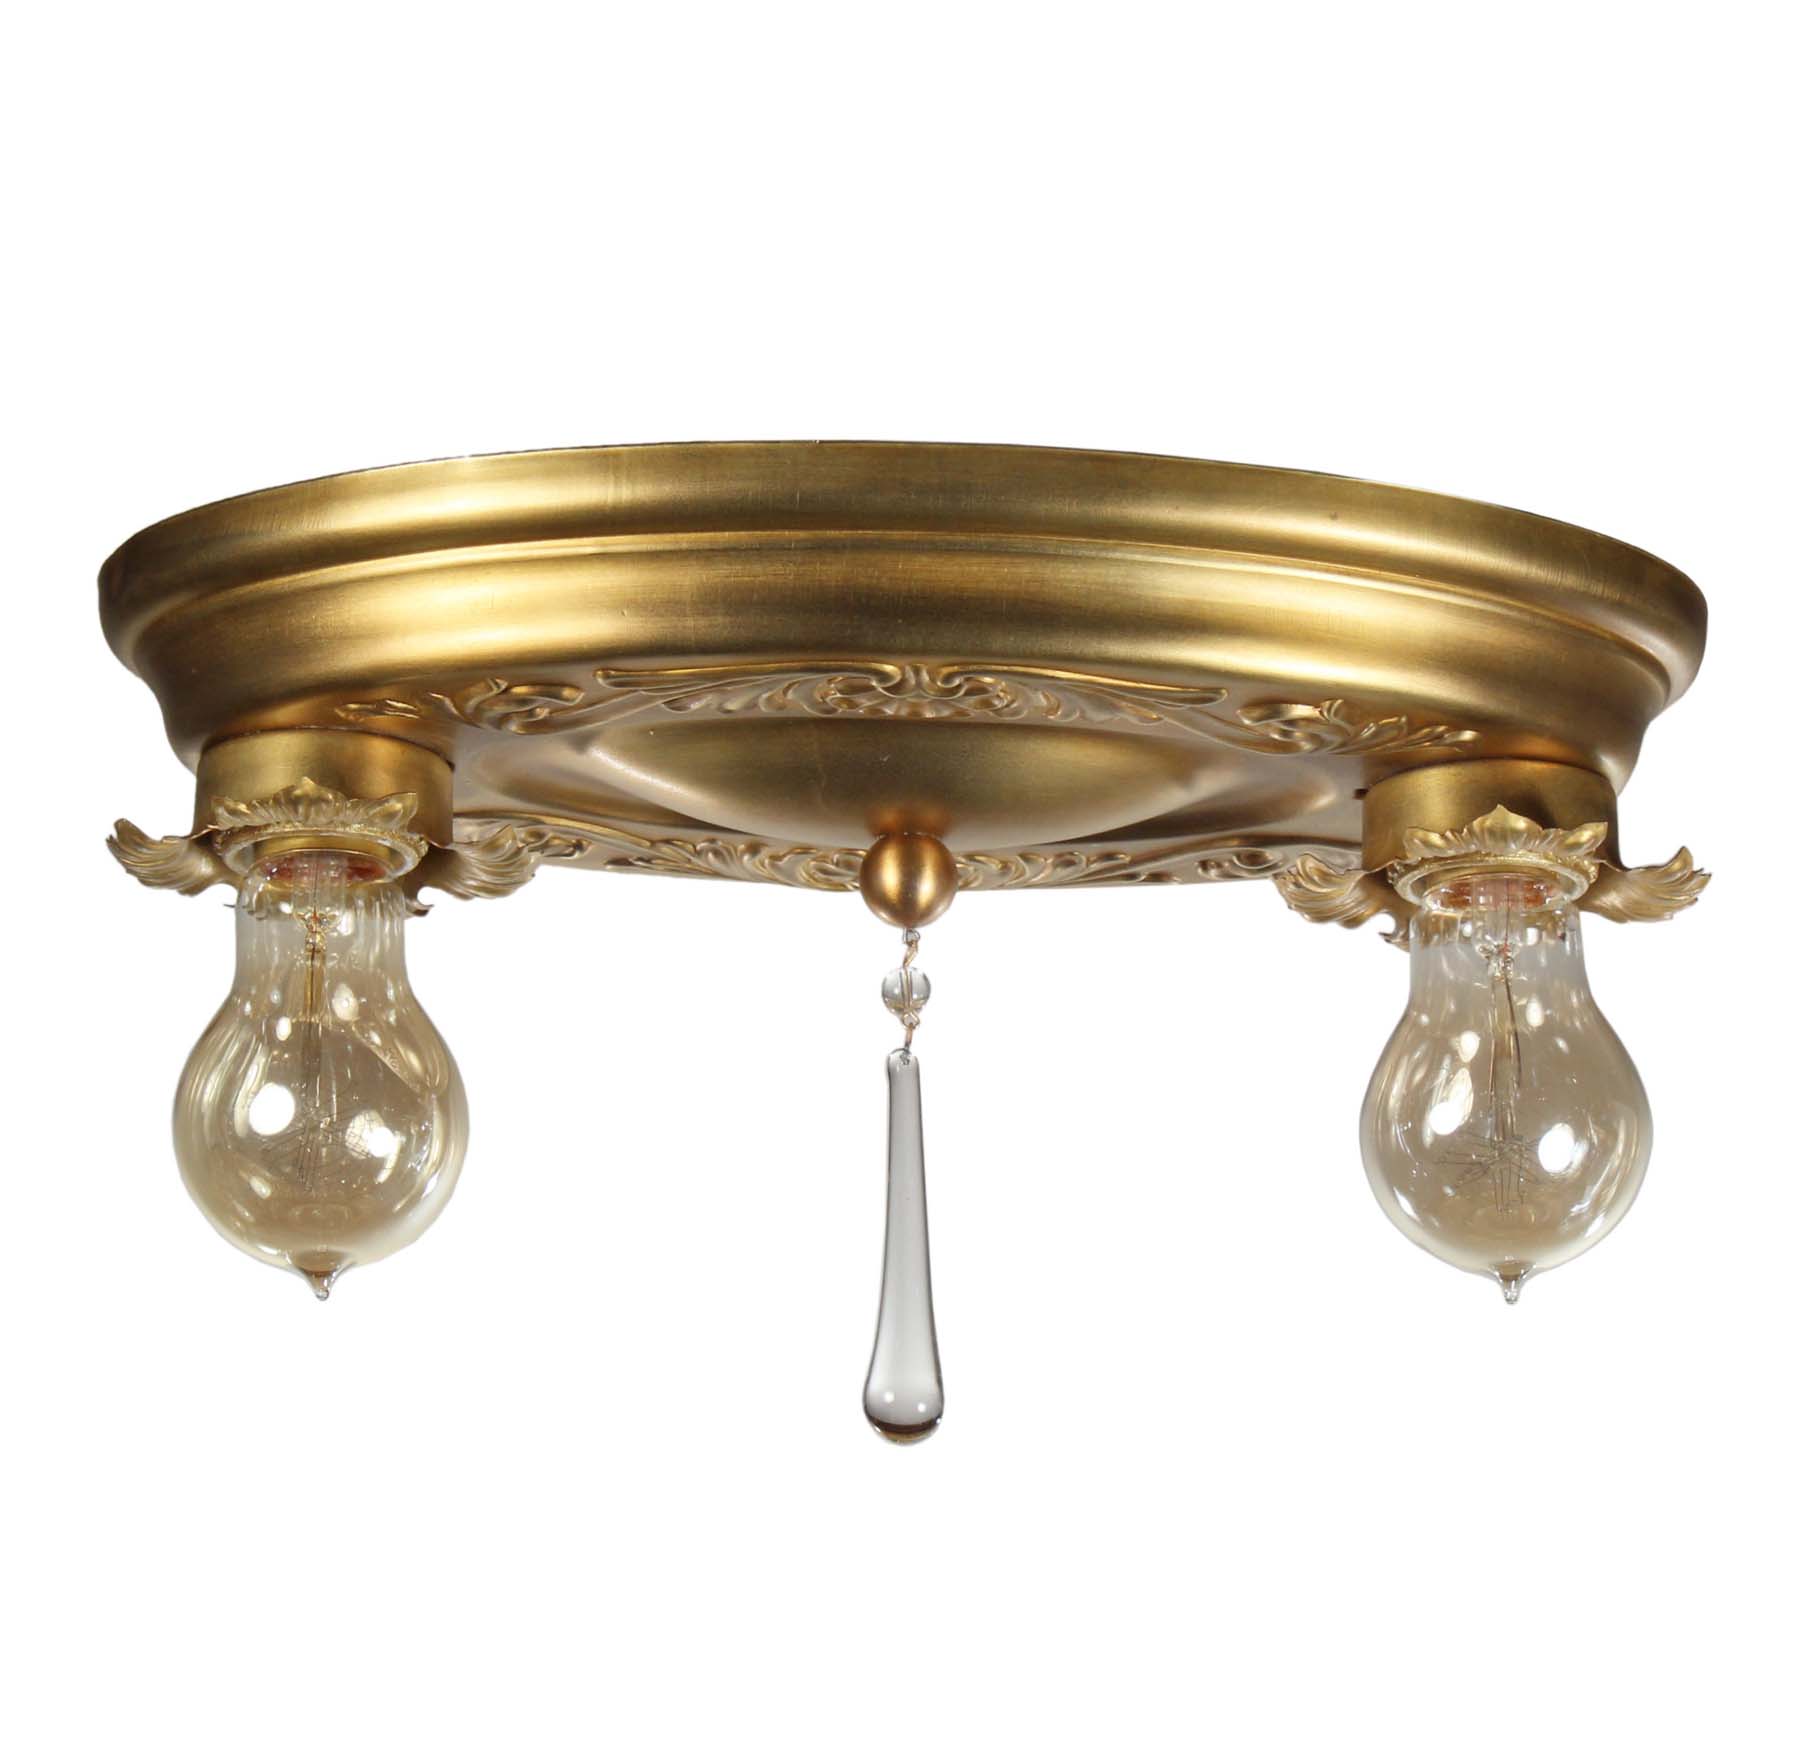 SOLD Neoclassical Flush Mount Fixtures in Brass, Antique Lighting-68401